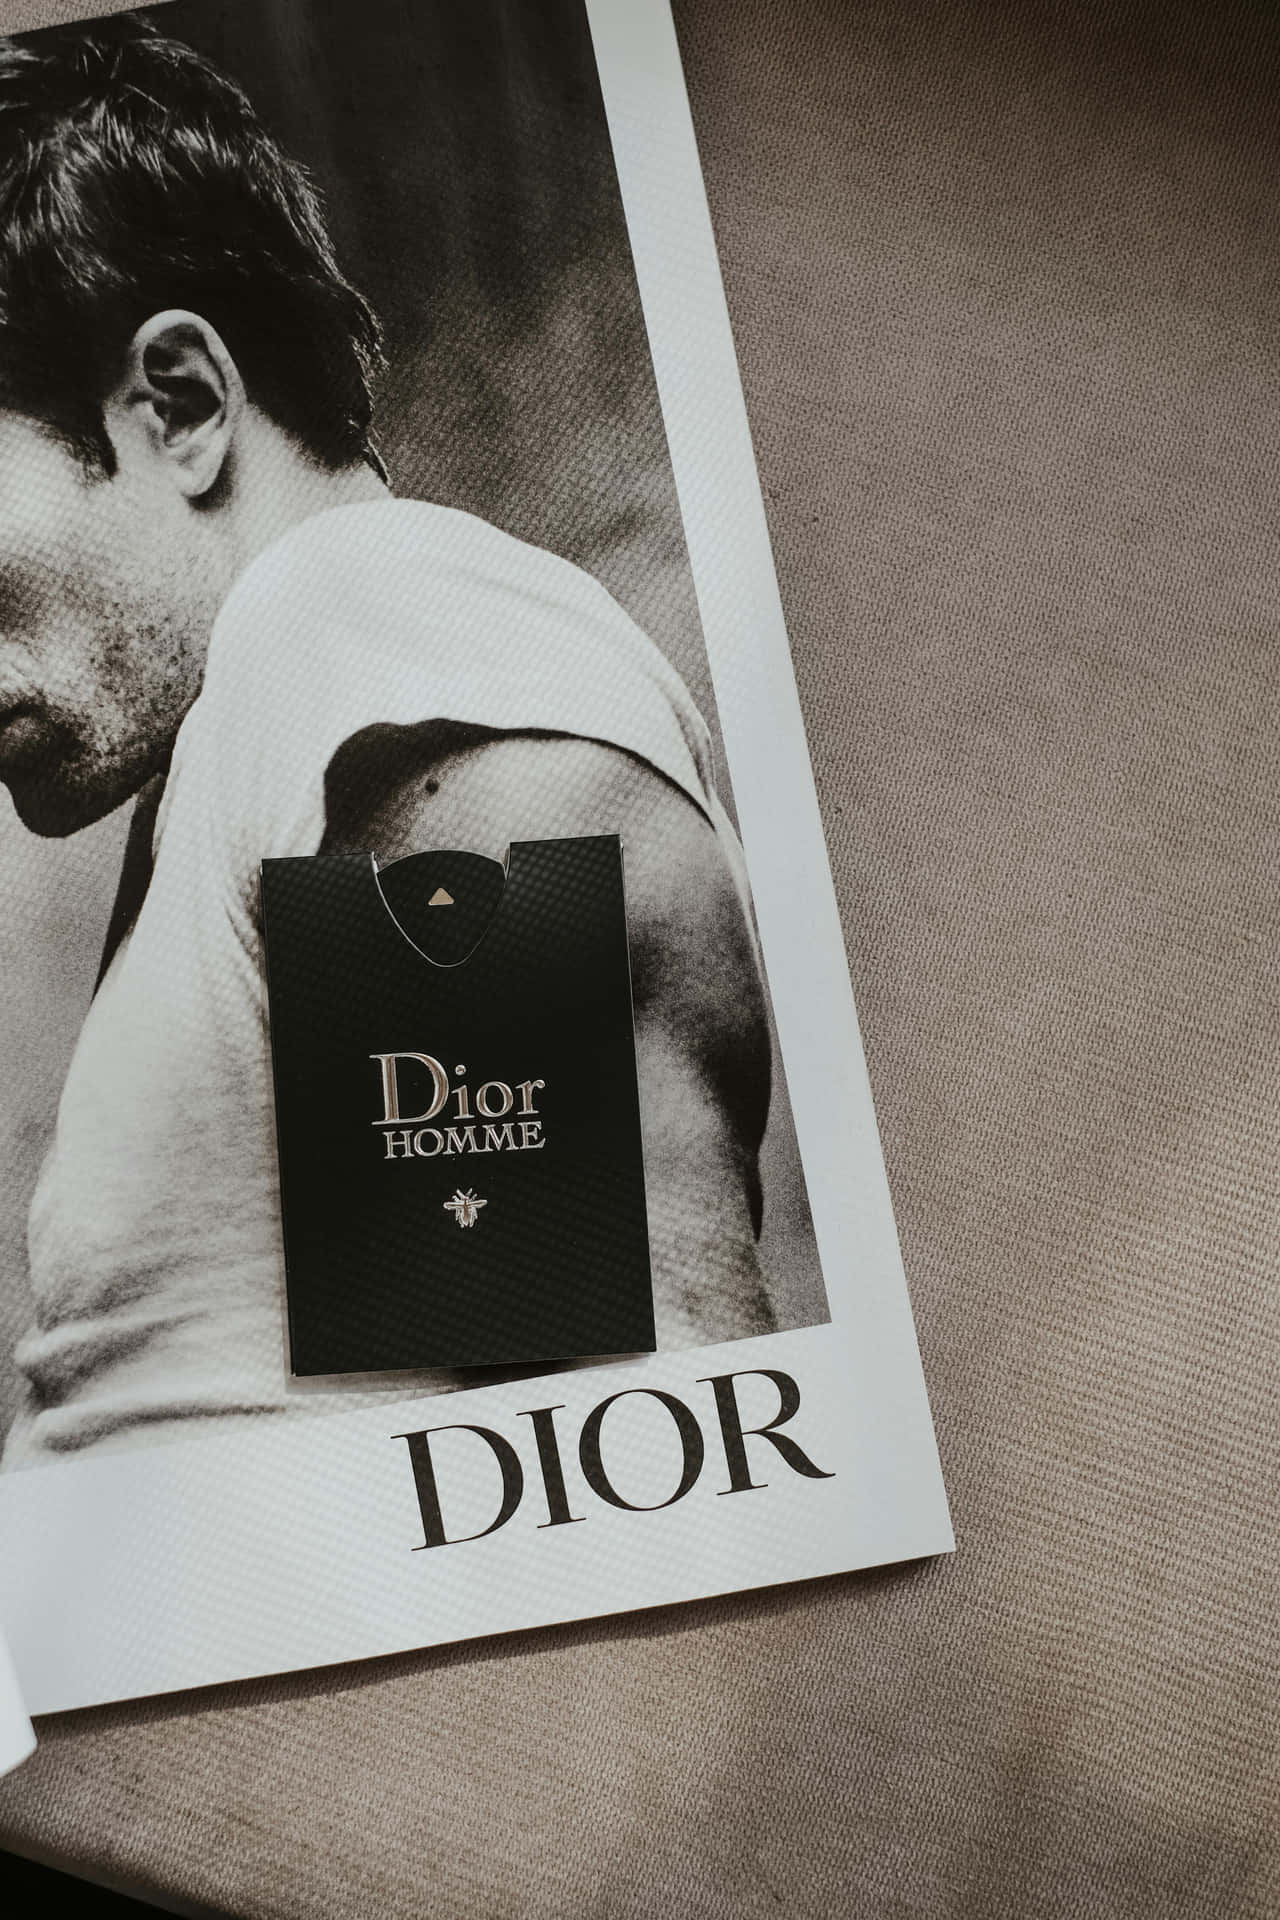 Dior Homme Fragrance Advert Wallpaper